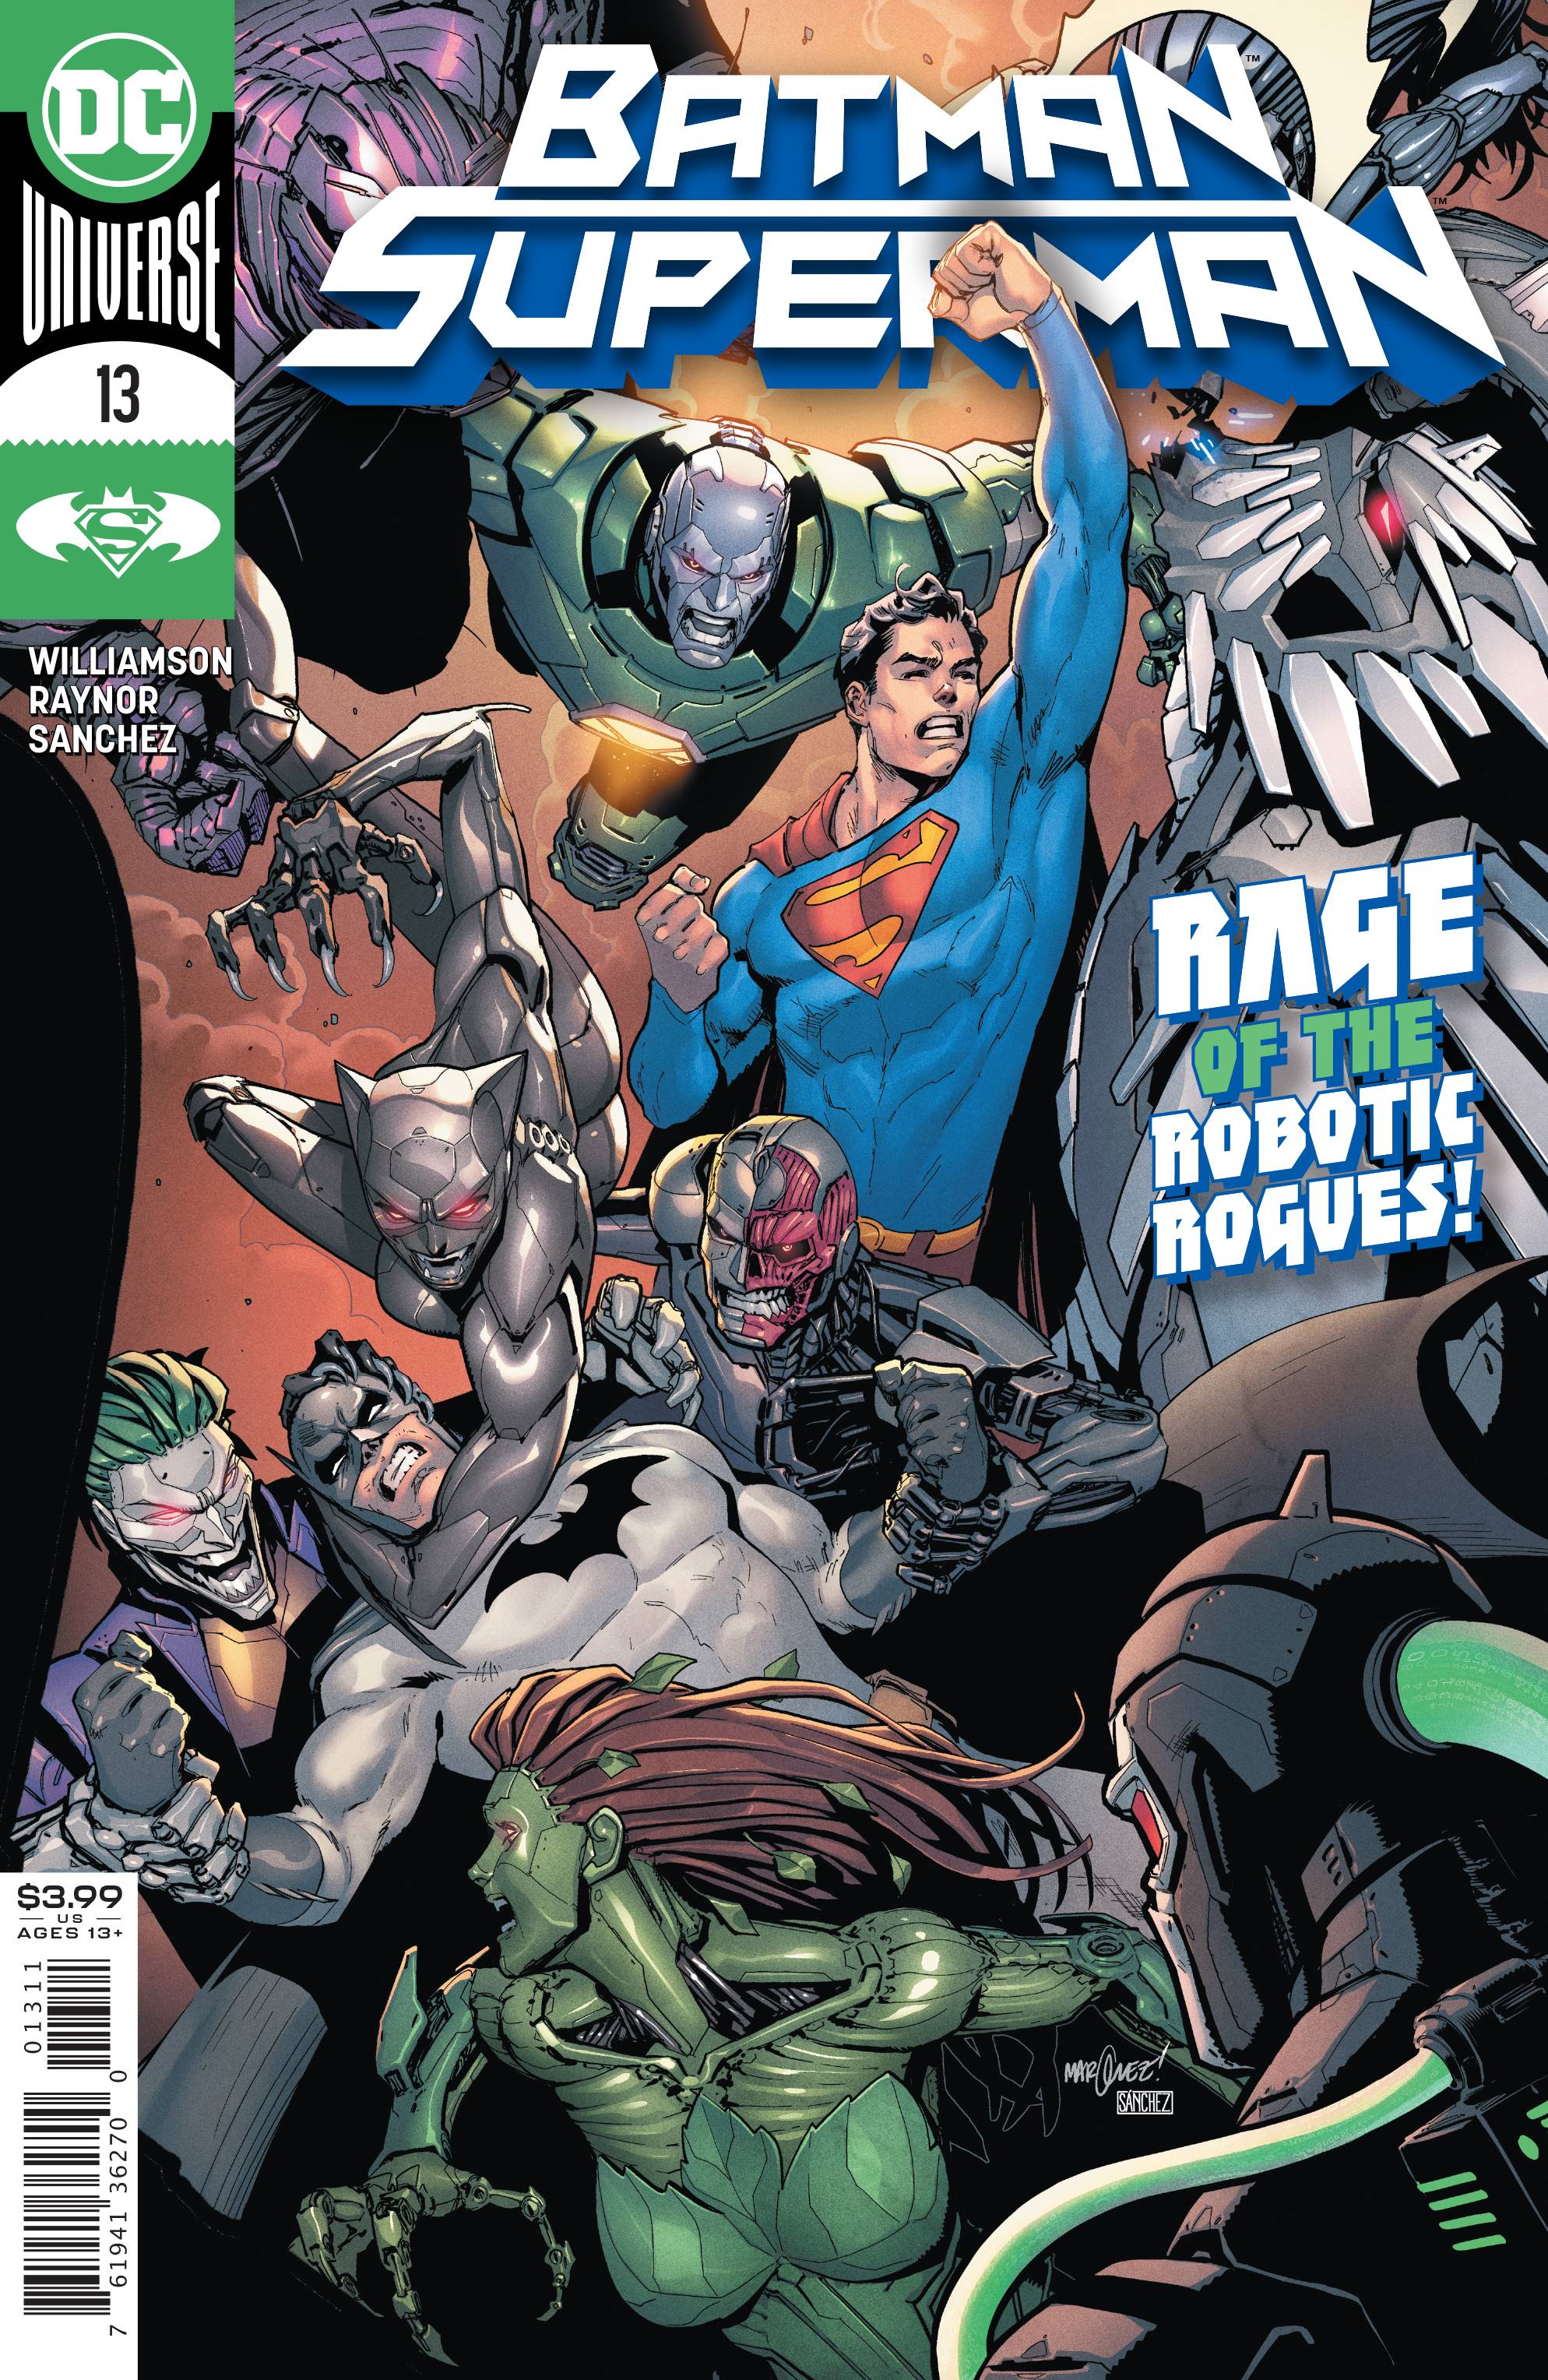 BATMAN SUPERMAN #13 | Game Master's Emporium (The New GME)